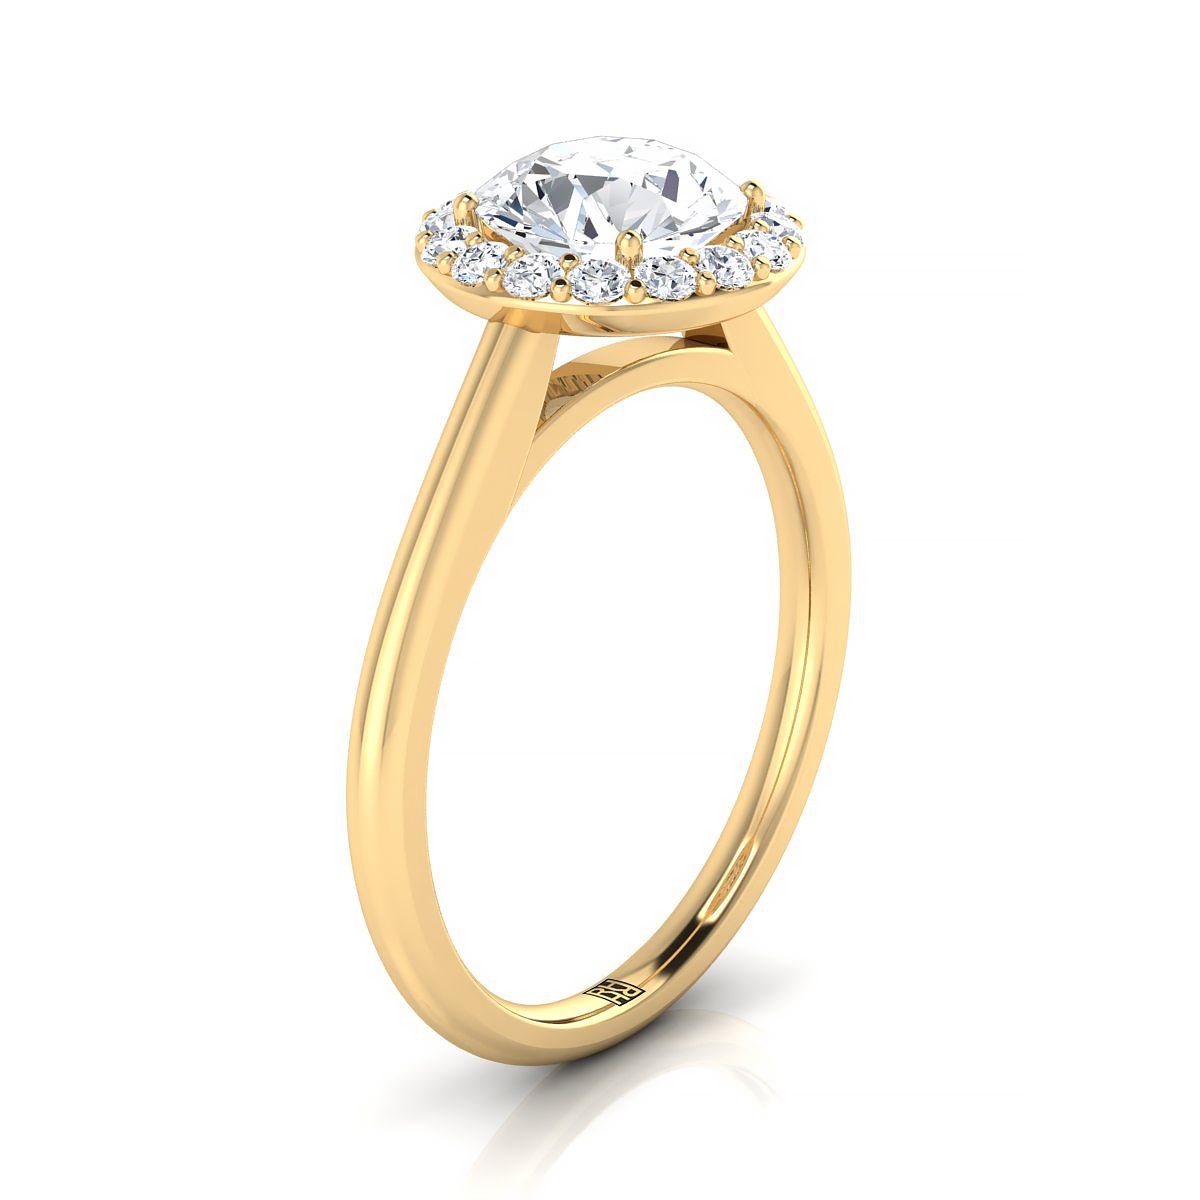 18K Yellow Gold Round Brilliant Citrine Shared Prong Diamond Halo Engagement Ring -1/5ctw